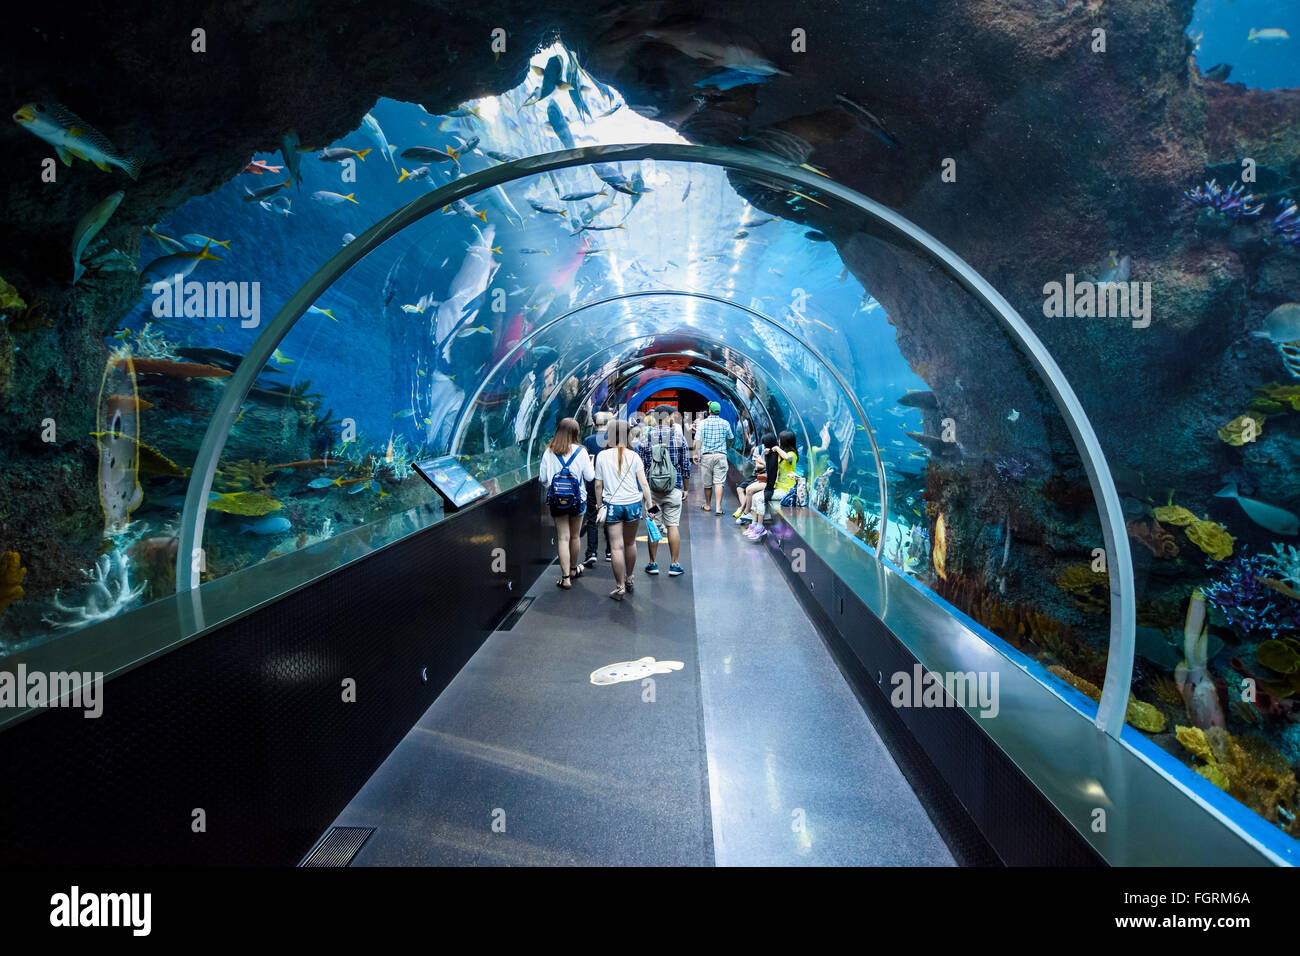 Besucher auf das S.E.A Aquarium tunnel Travelator, Sentosa Island, Singapur Stockfoto